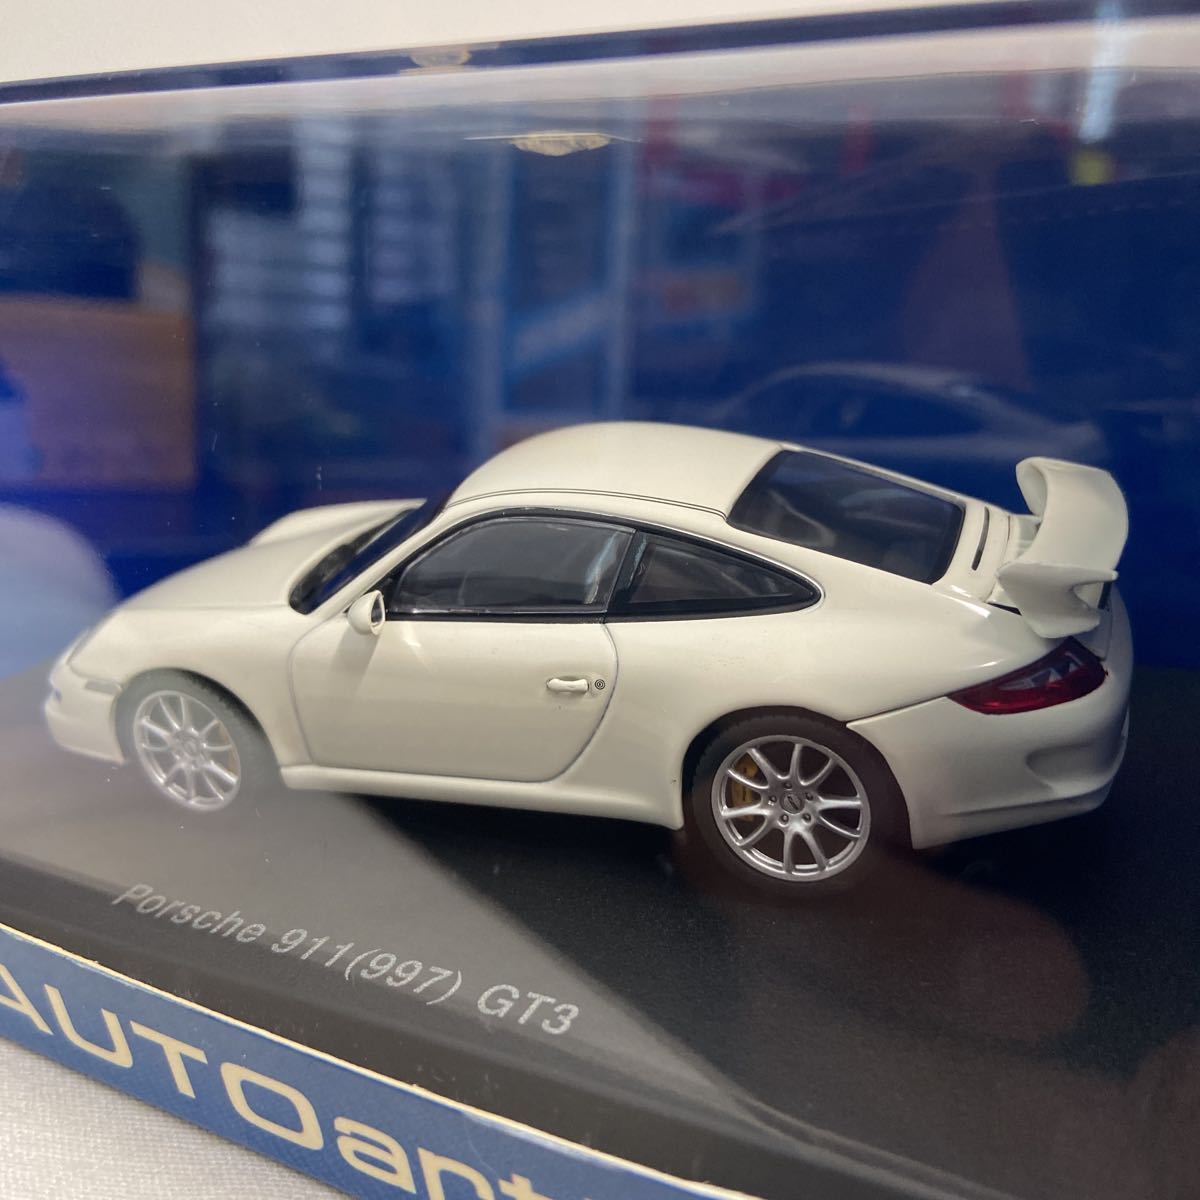 AUTOart 1/43 Porsche 911 GT3 White オートアート ポルシェ 997型 ホワイト ミニカー モデルカー_画像5